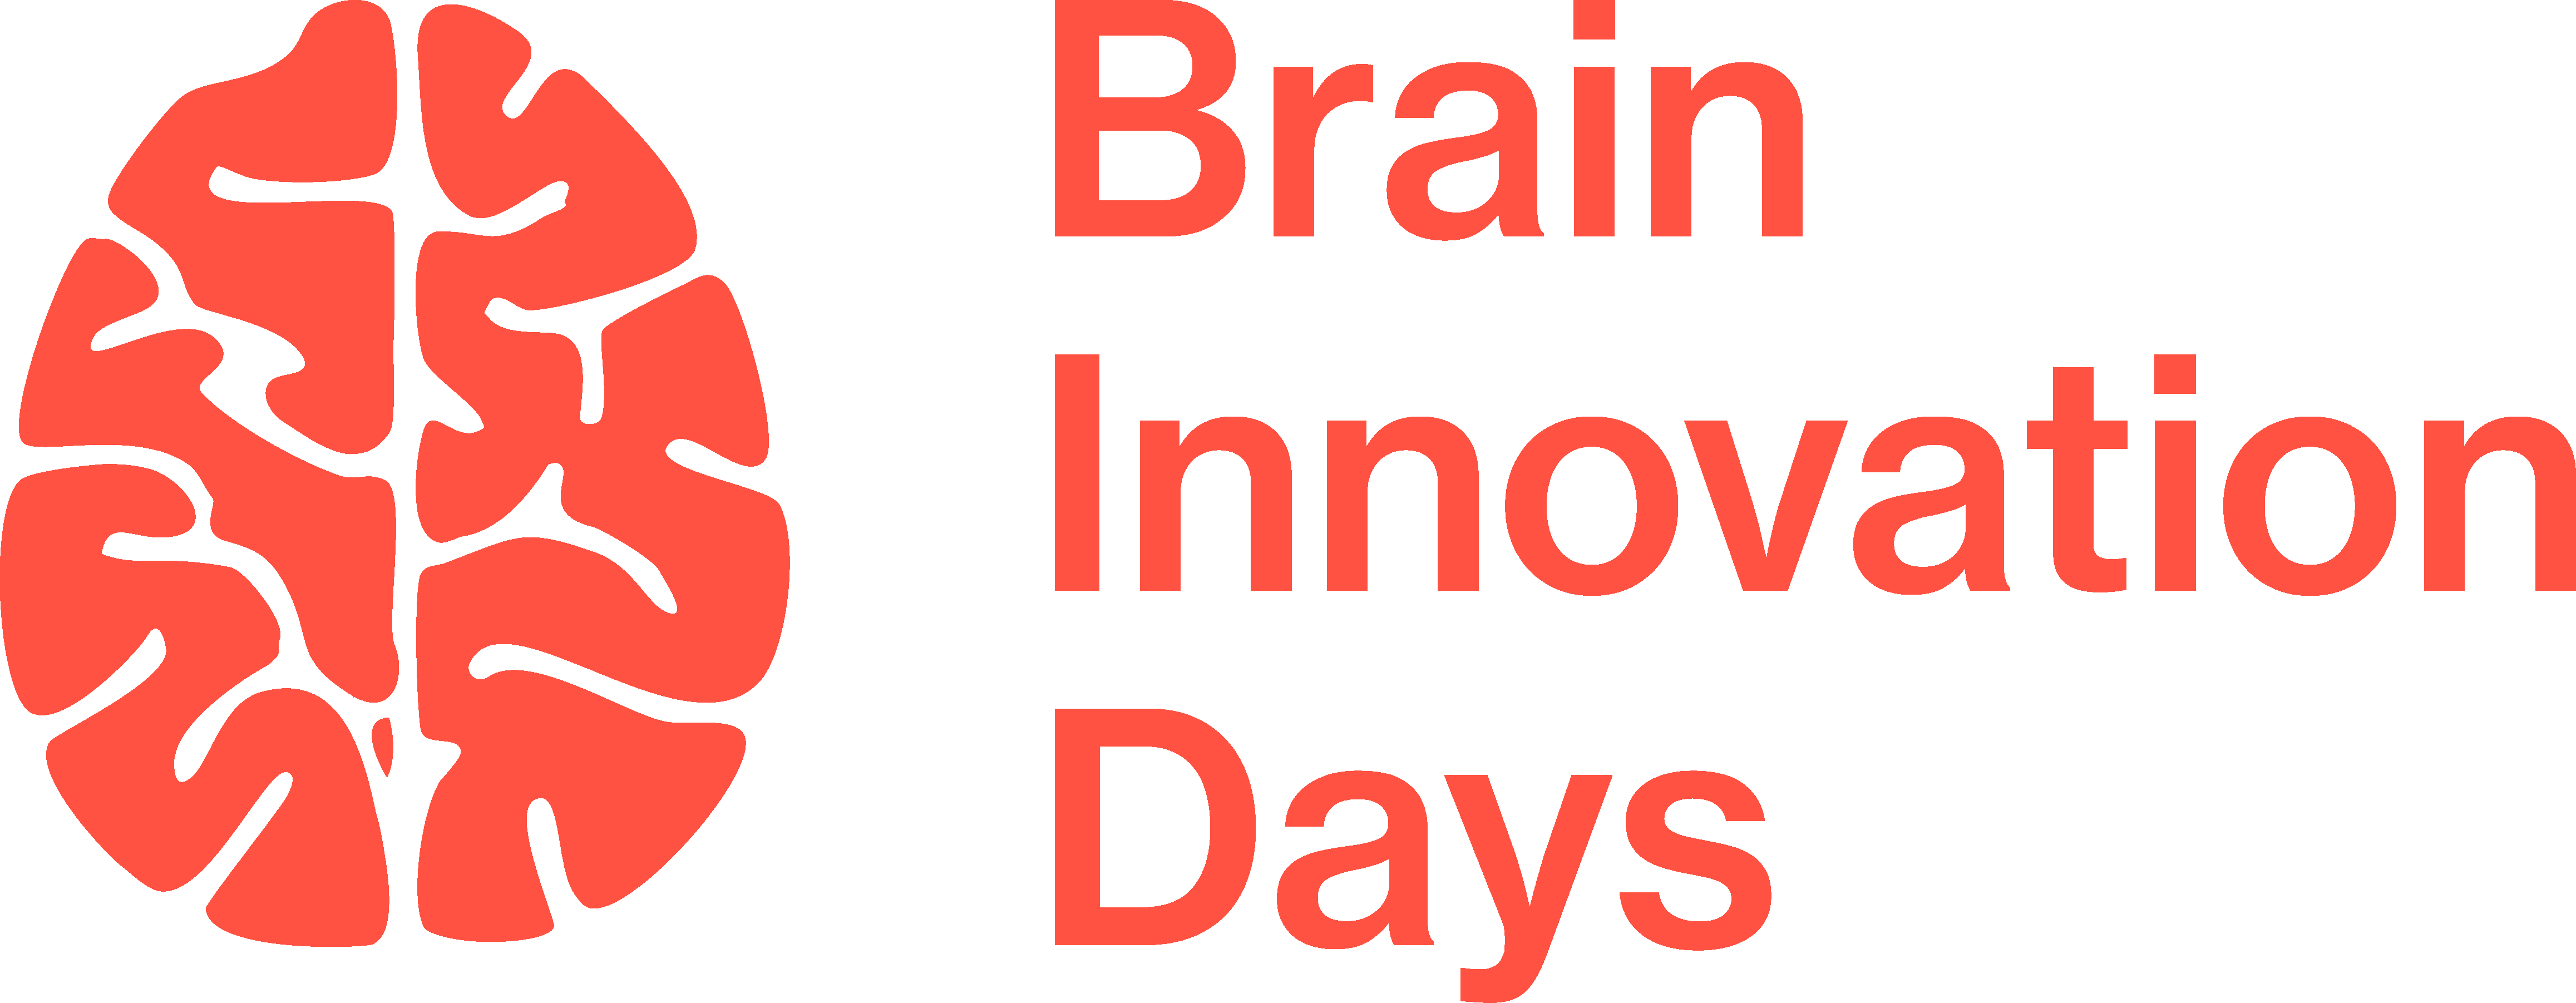 brain innovation days